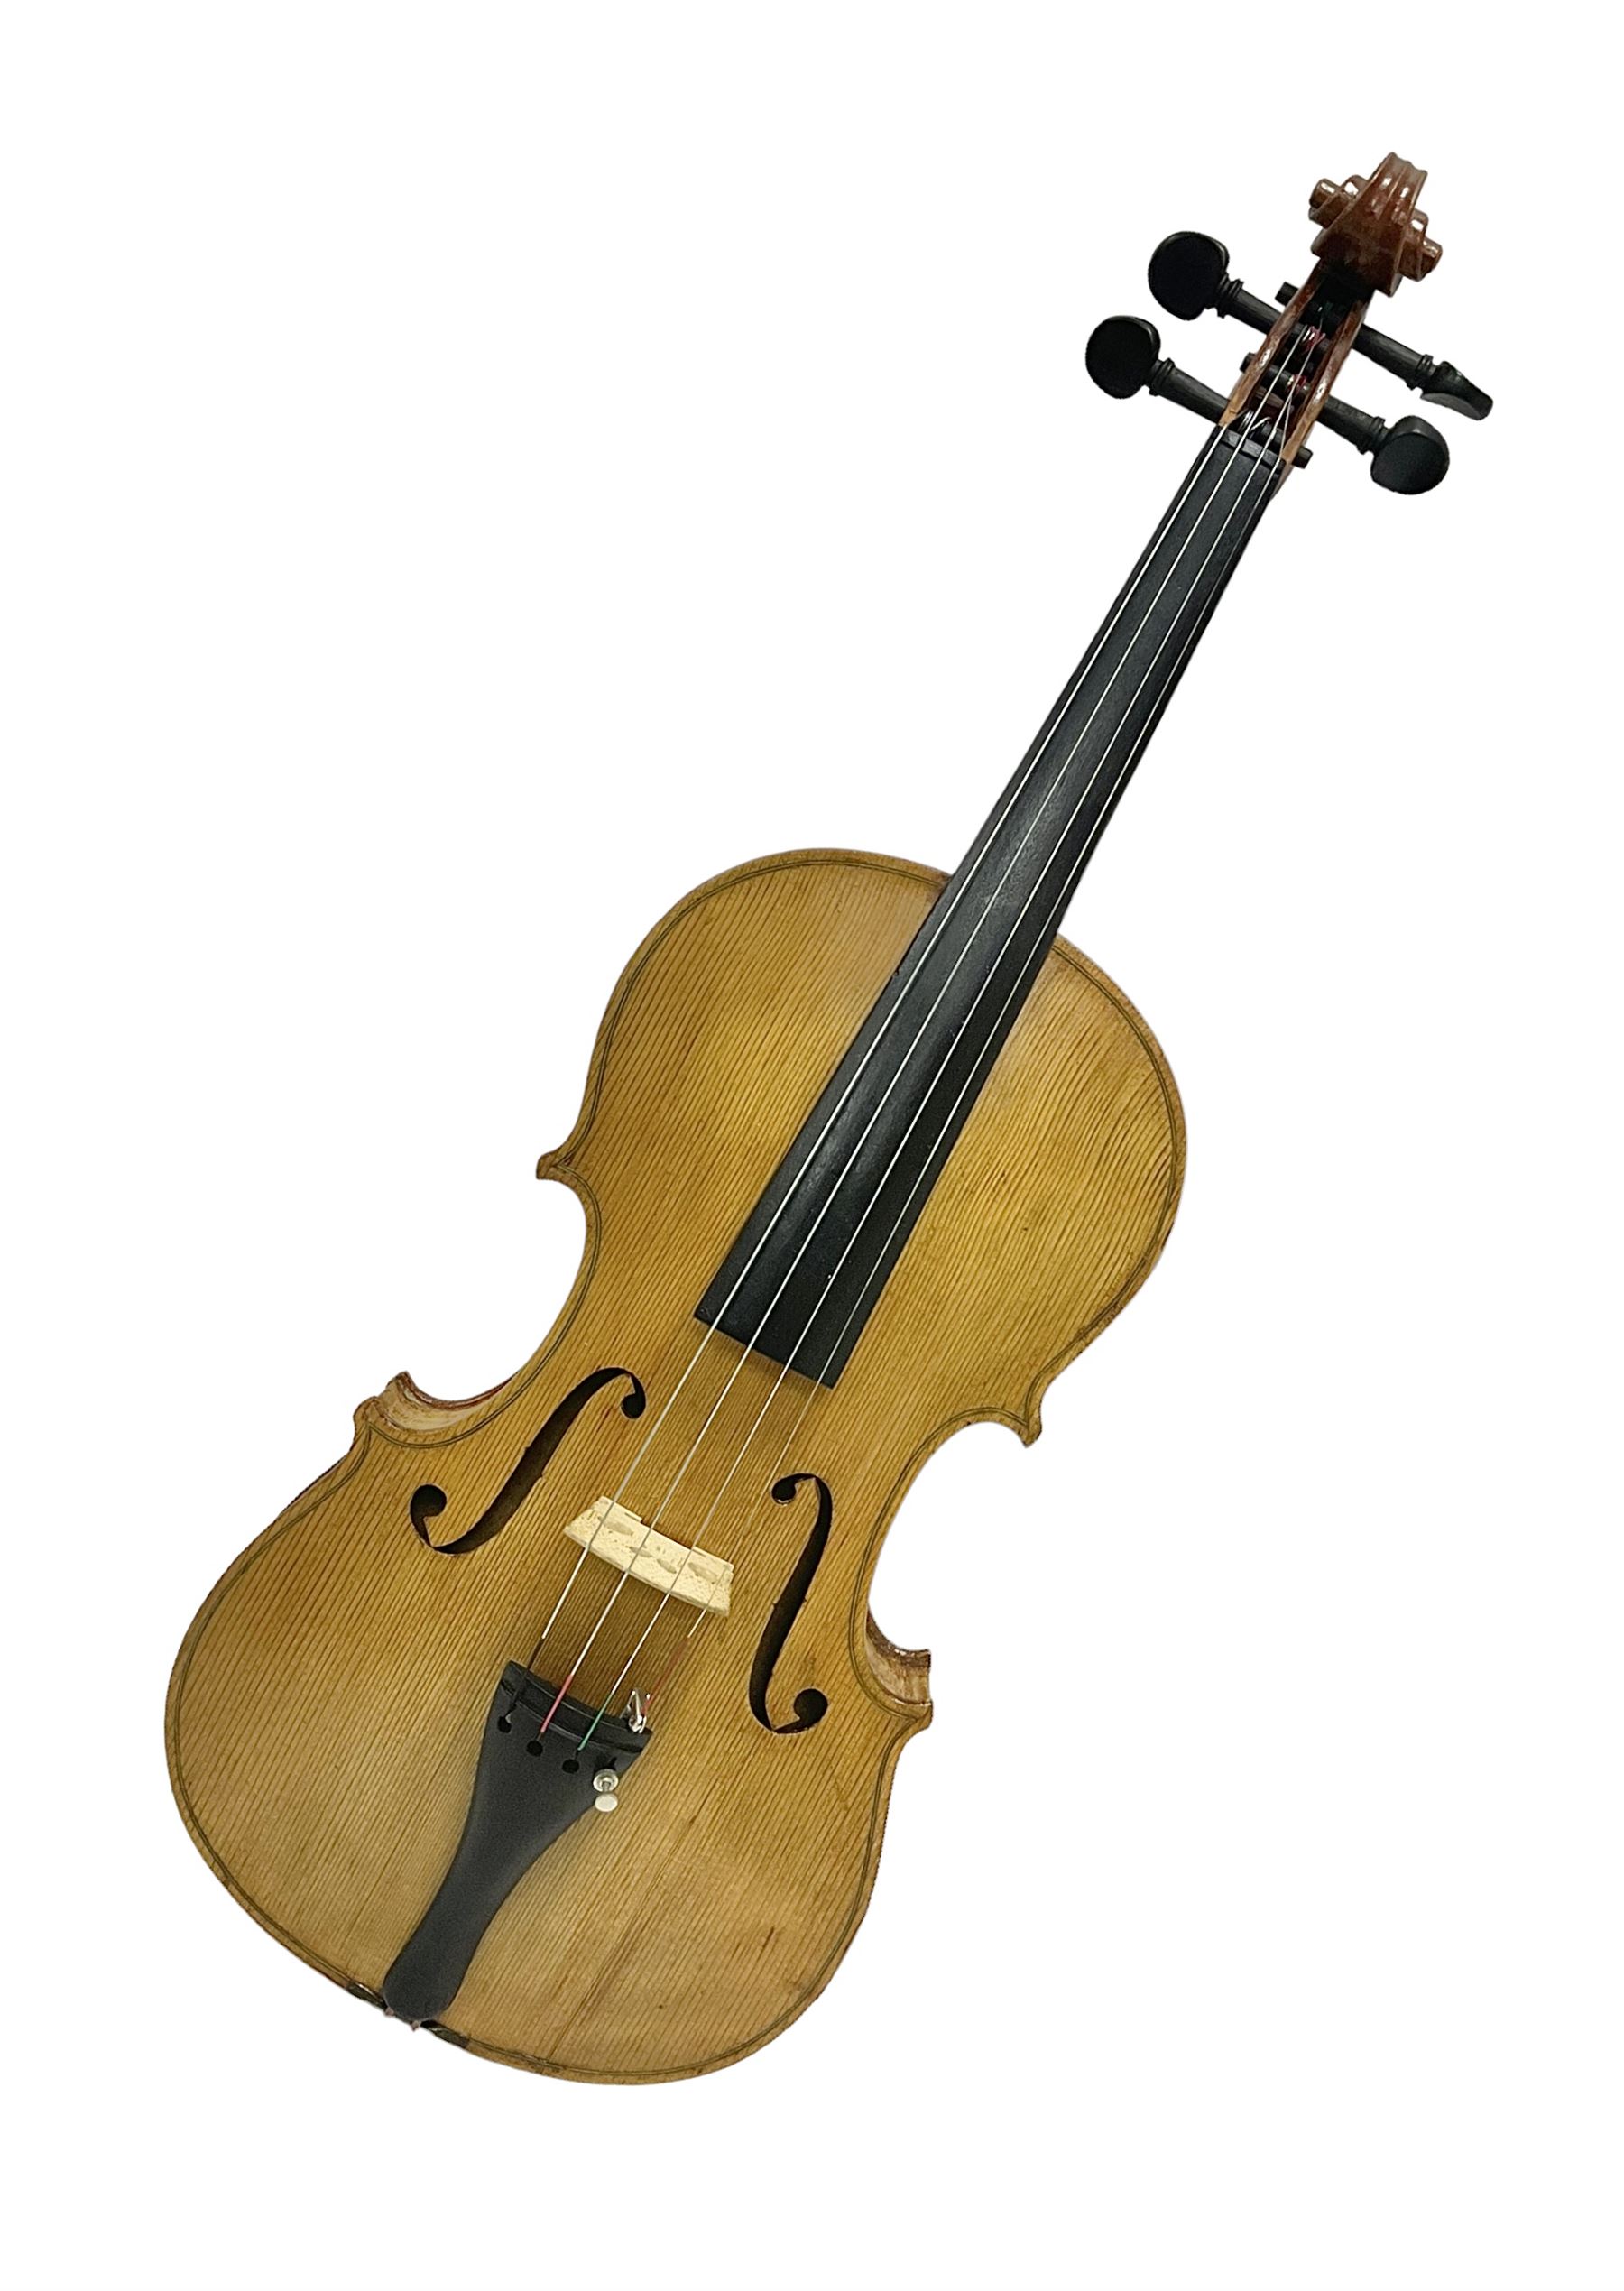 Copy of a full size Stradivarius violin